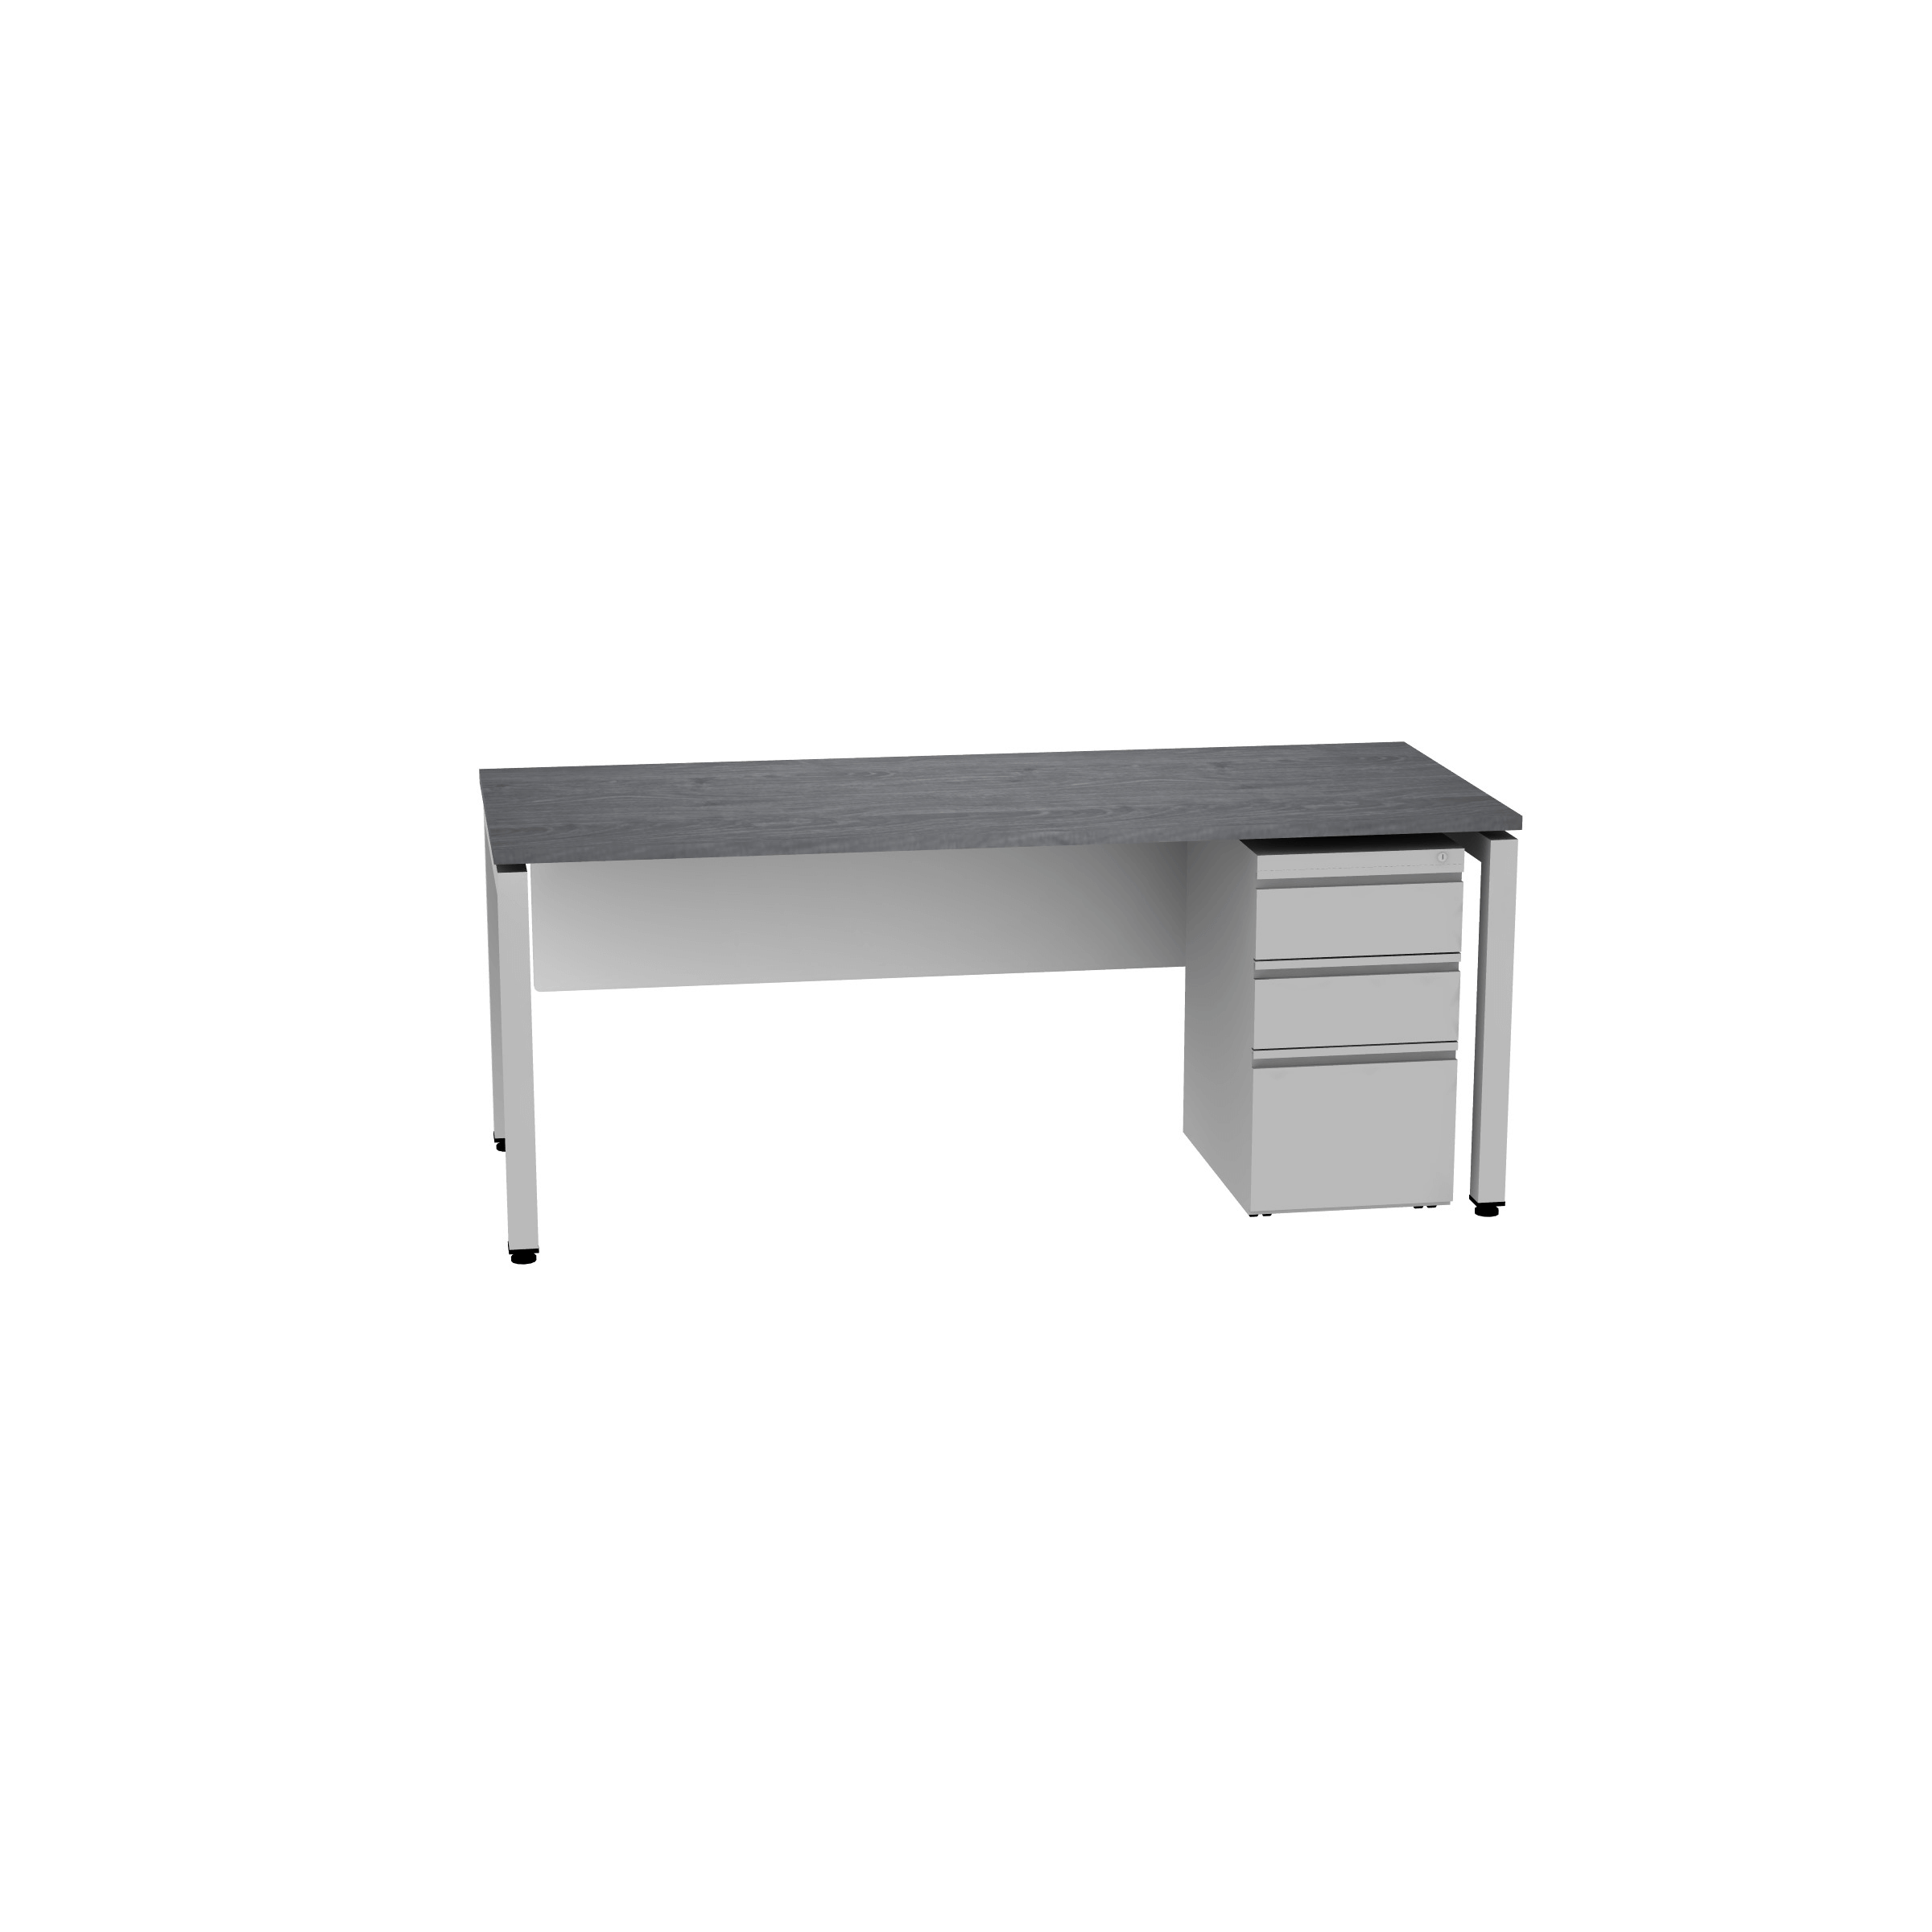 PROGRESSIVE DESK Steel Modesty Panel - 39 - Black. Accessory for Computer  standing desk 48 x30 inch 